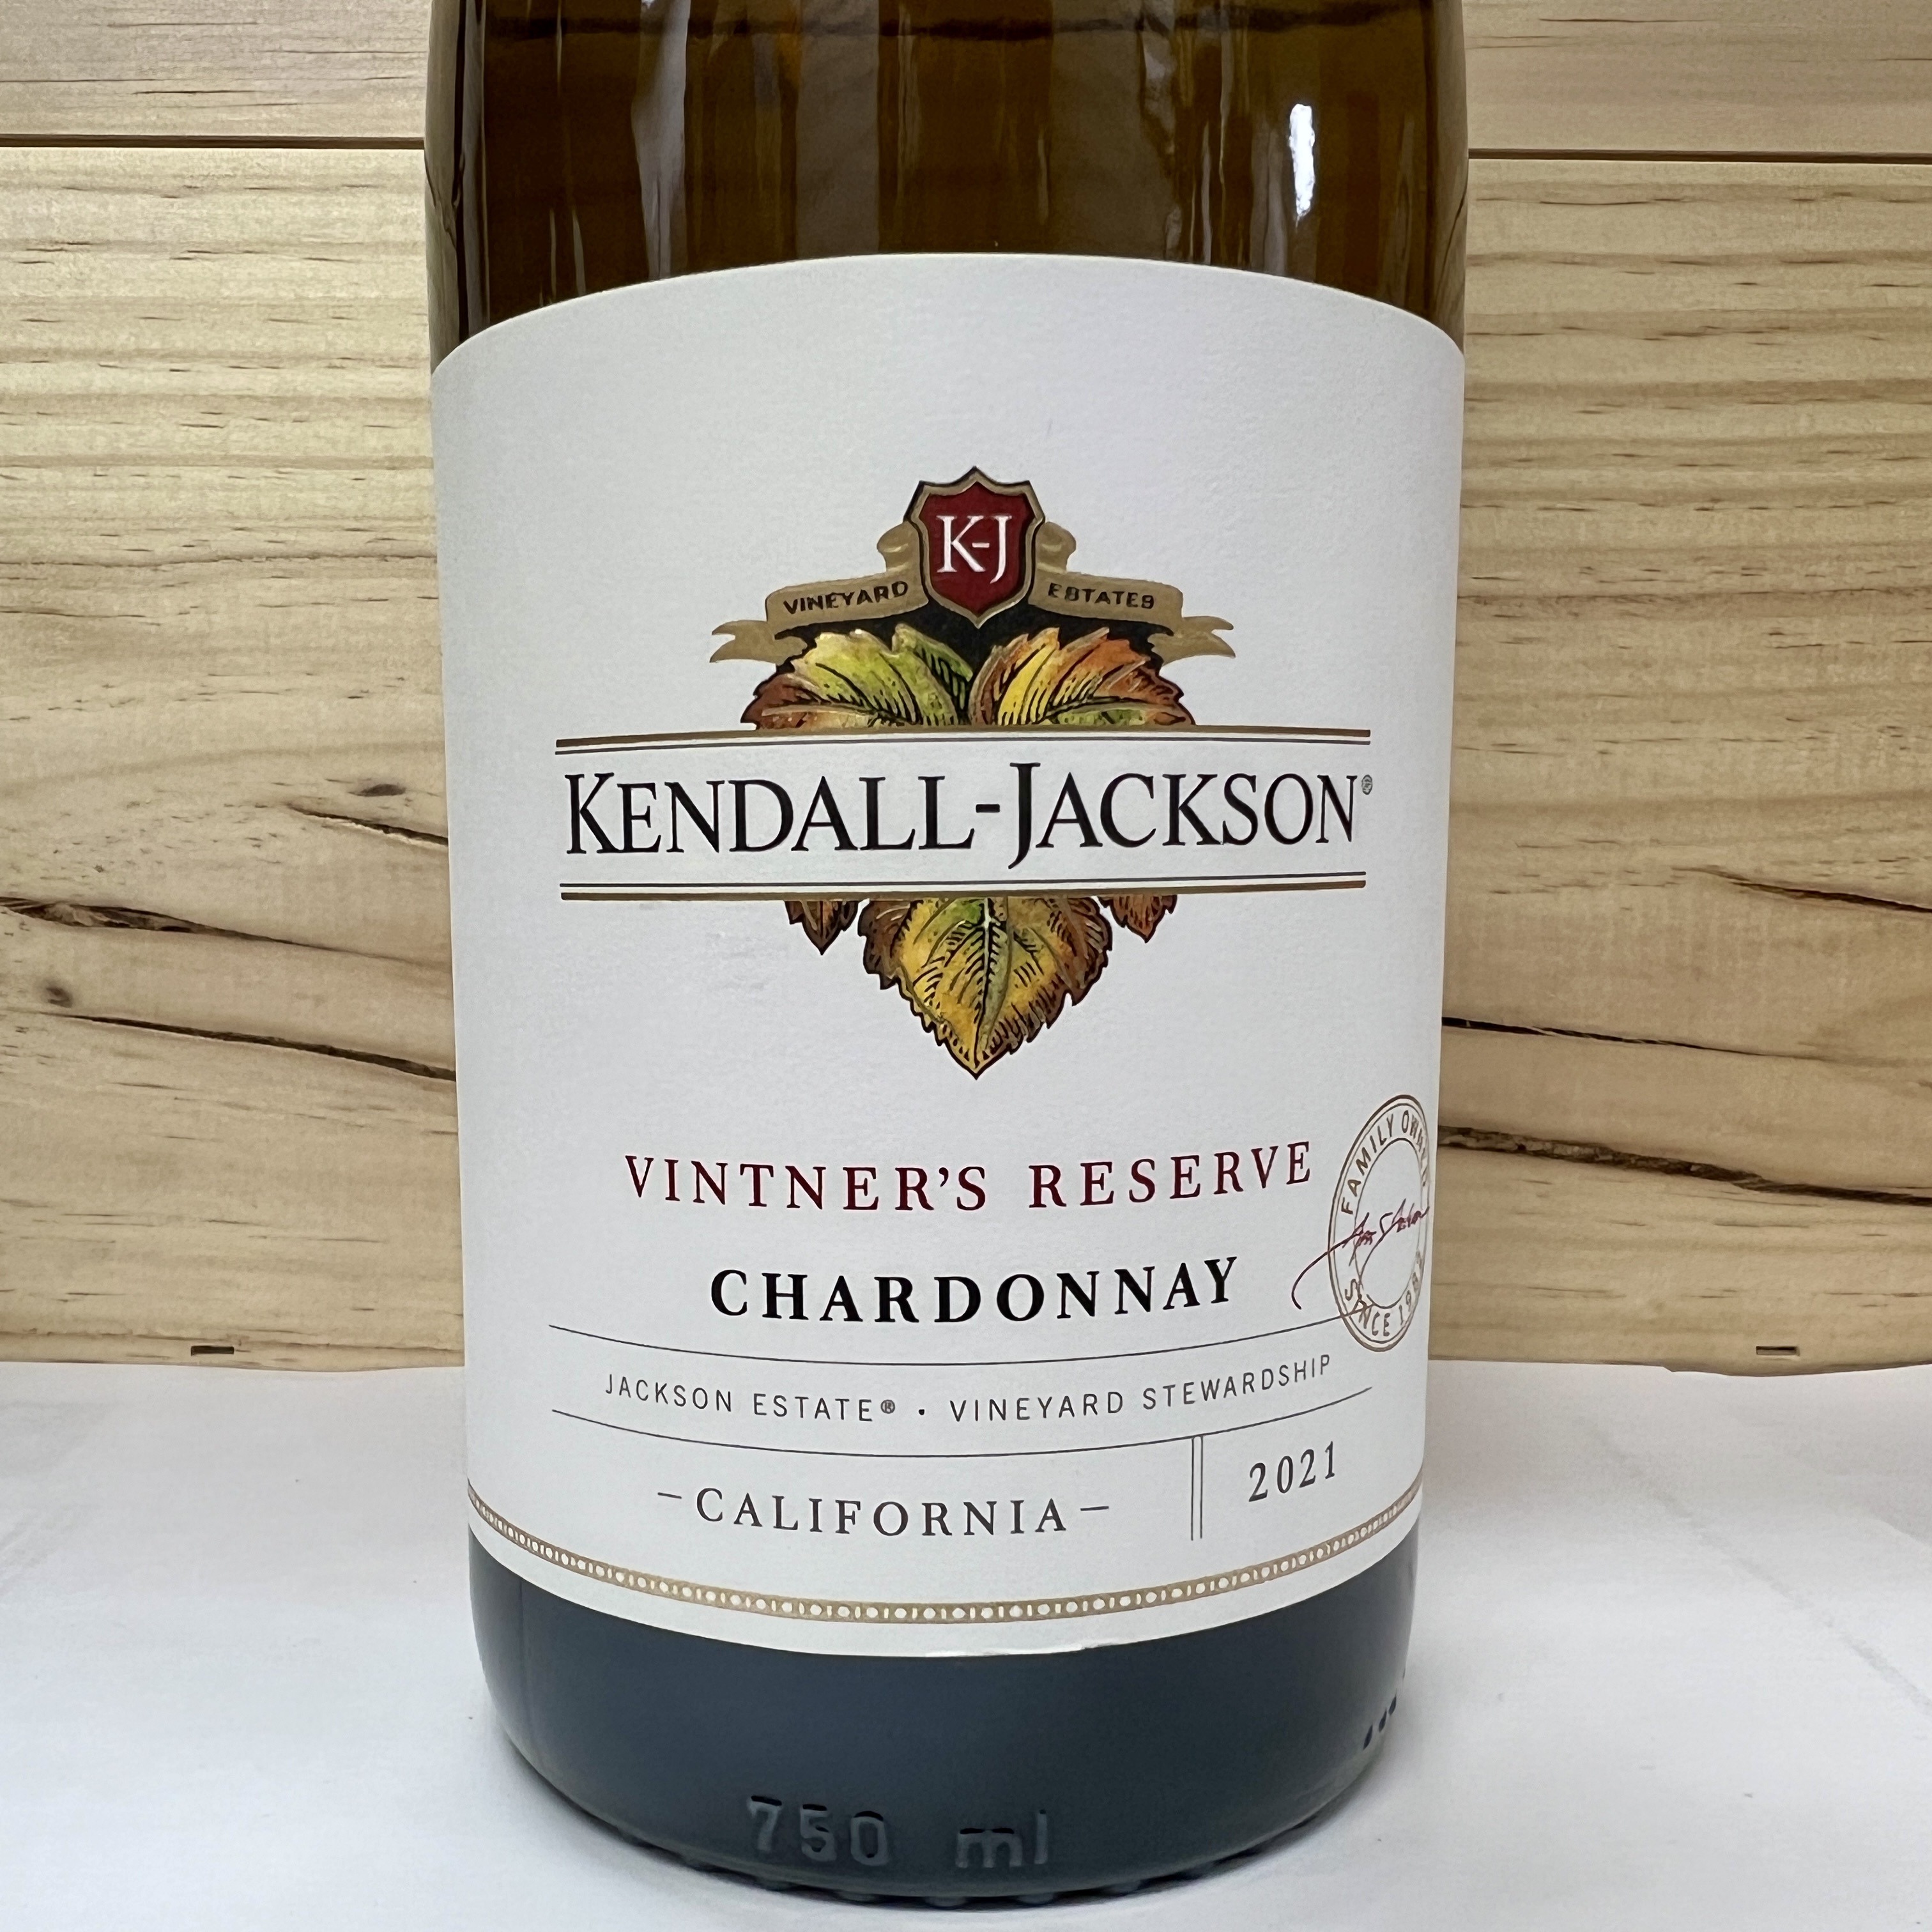 Kendall Jackson Vintner's Reserve Chardonnay 2021